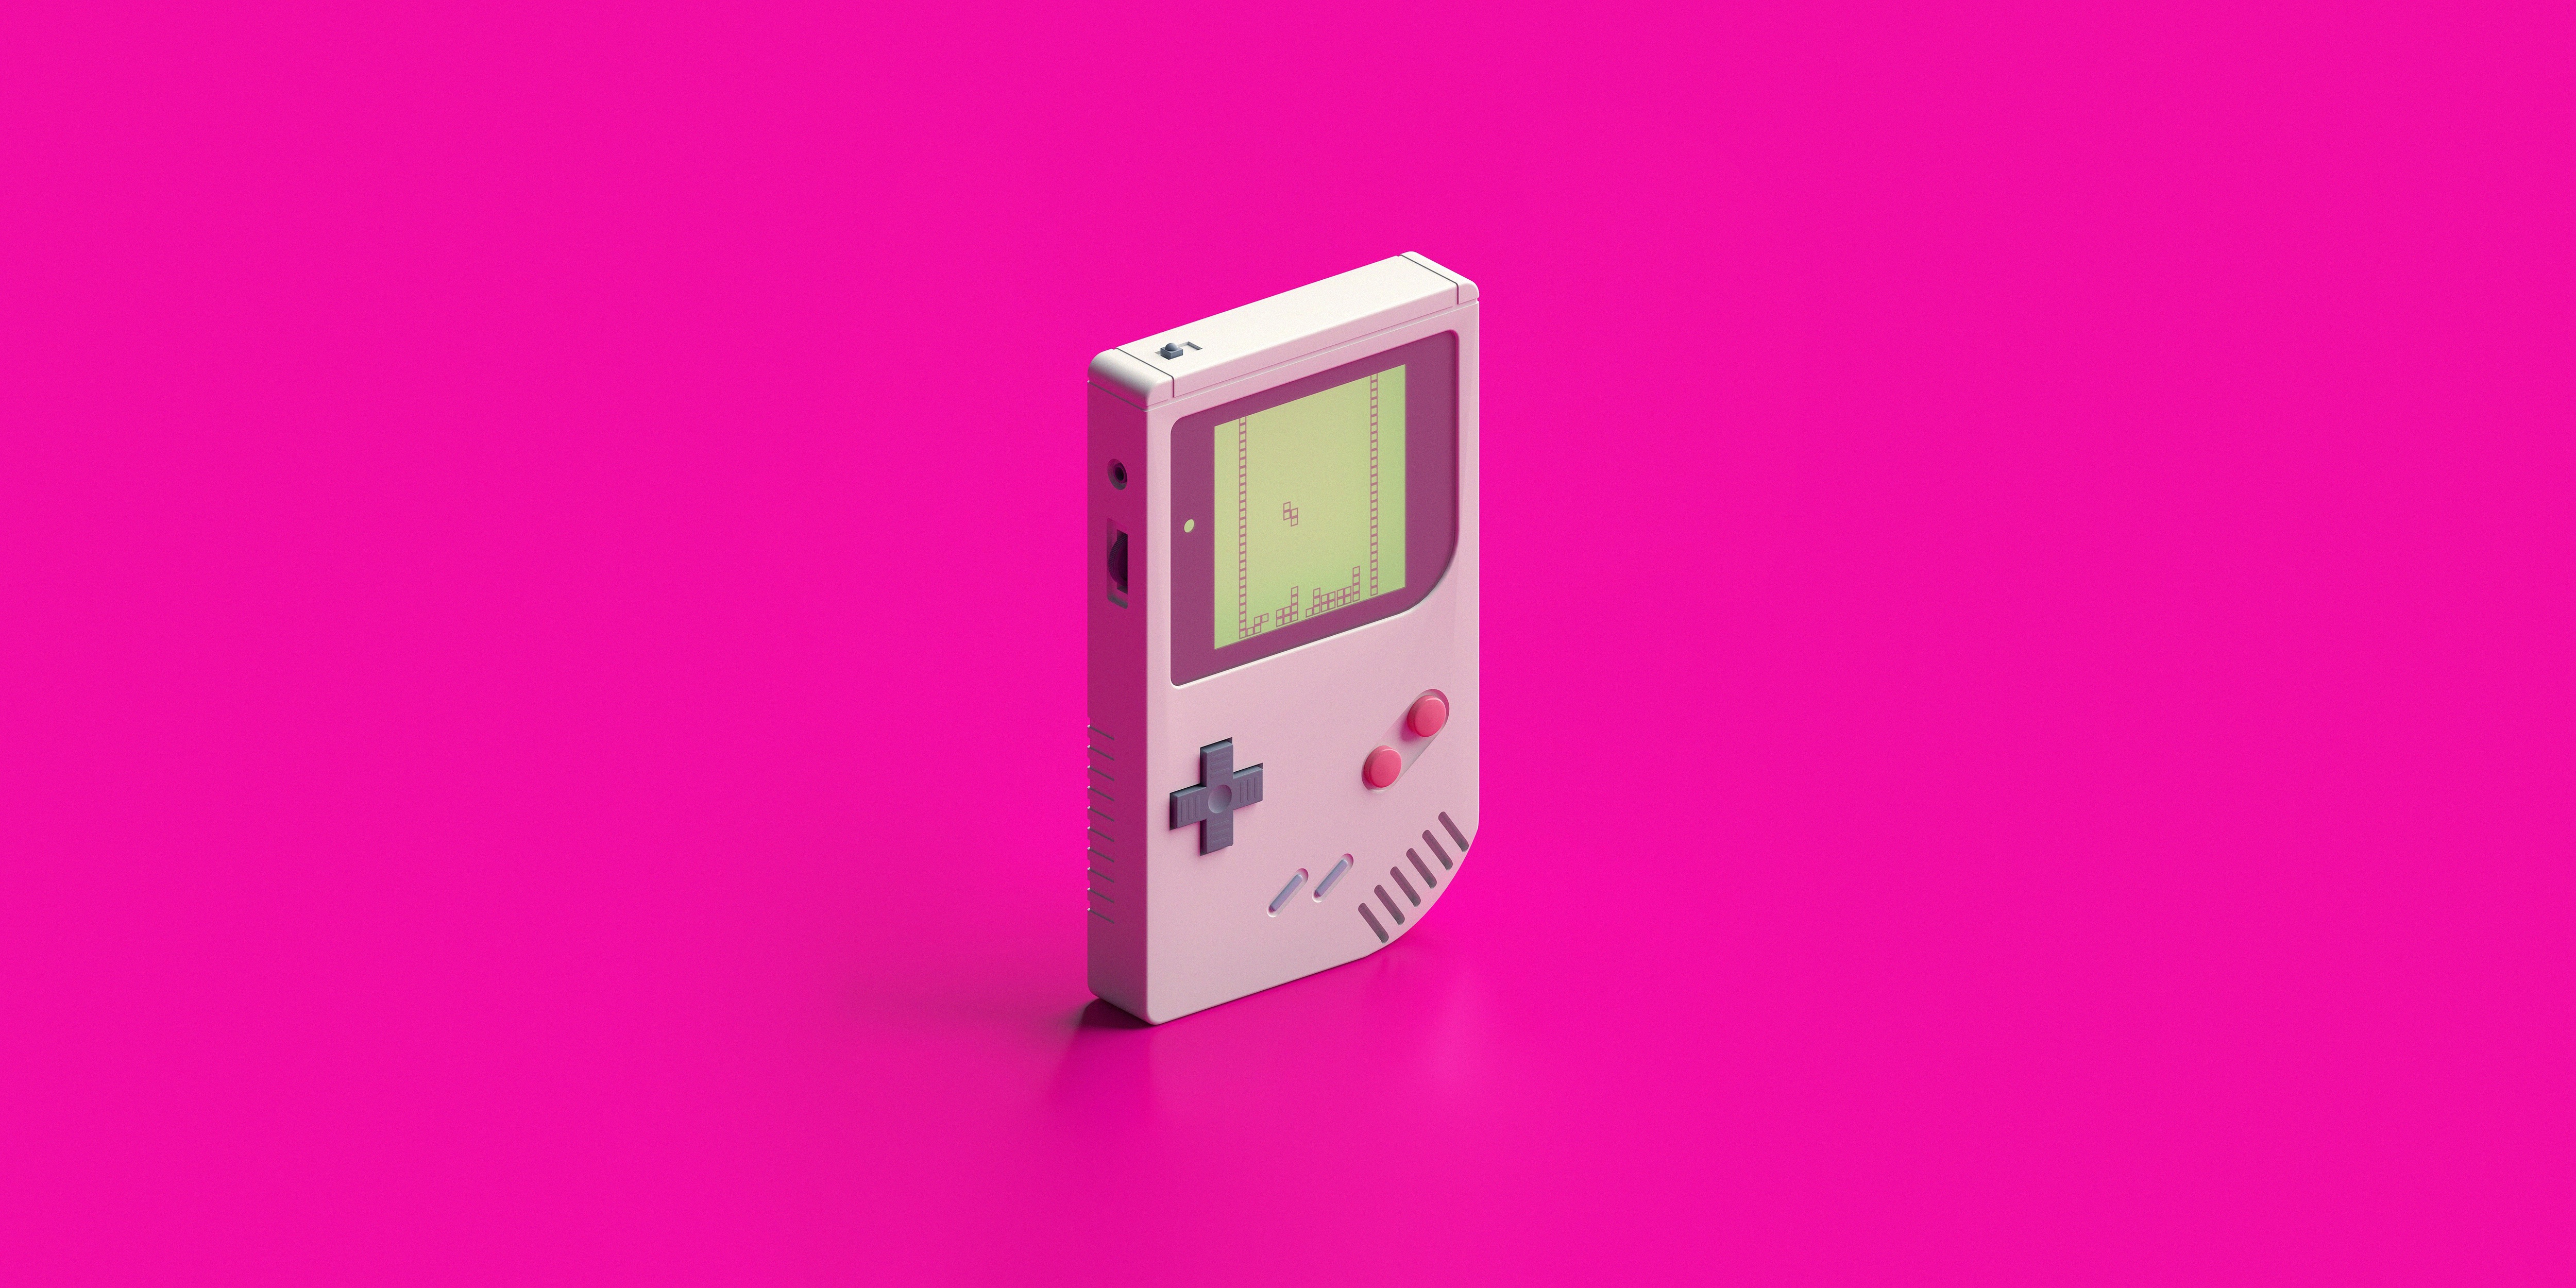 General 5000x2500 simple background pink background retro games video games GameBoy Nintendo pink synthwave LoFi magenta